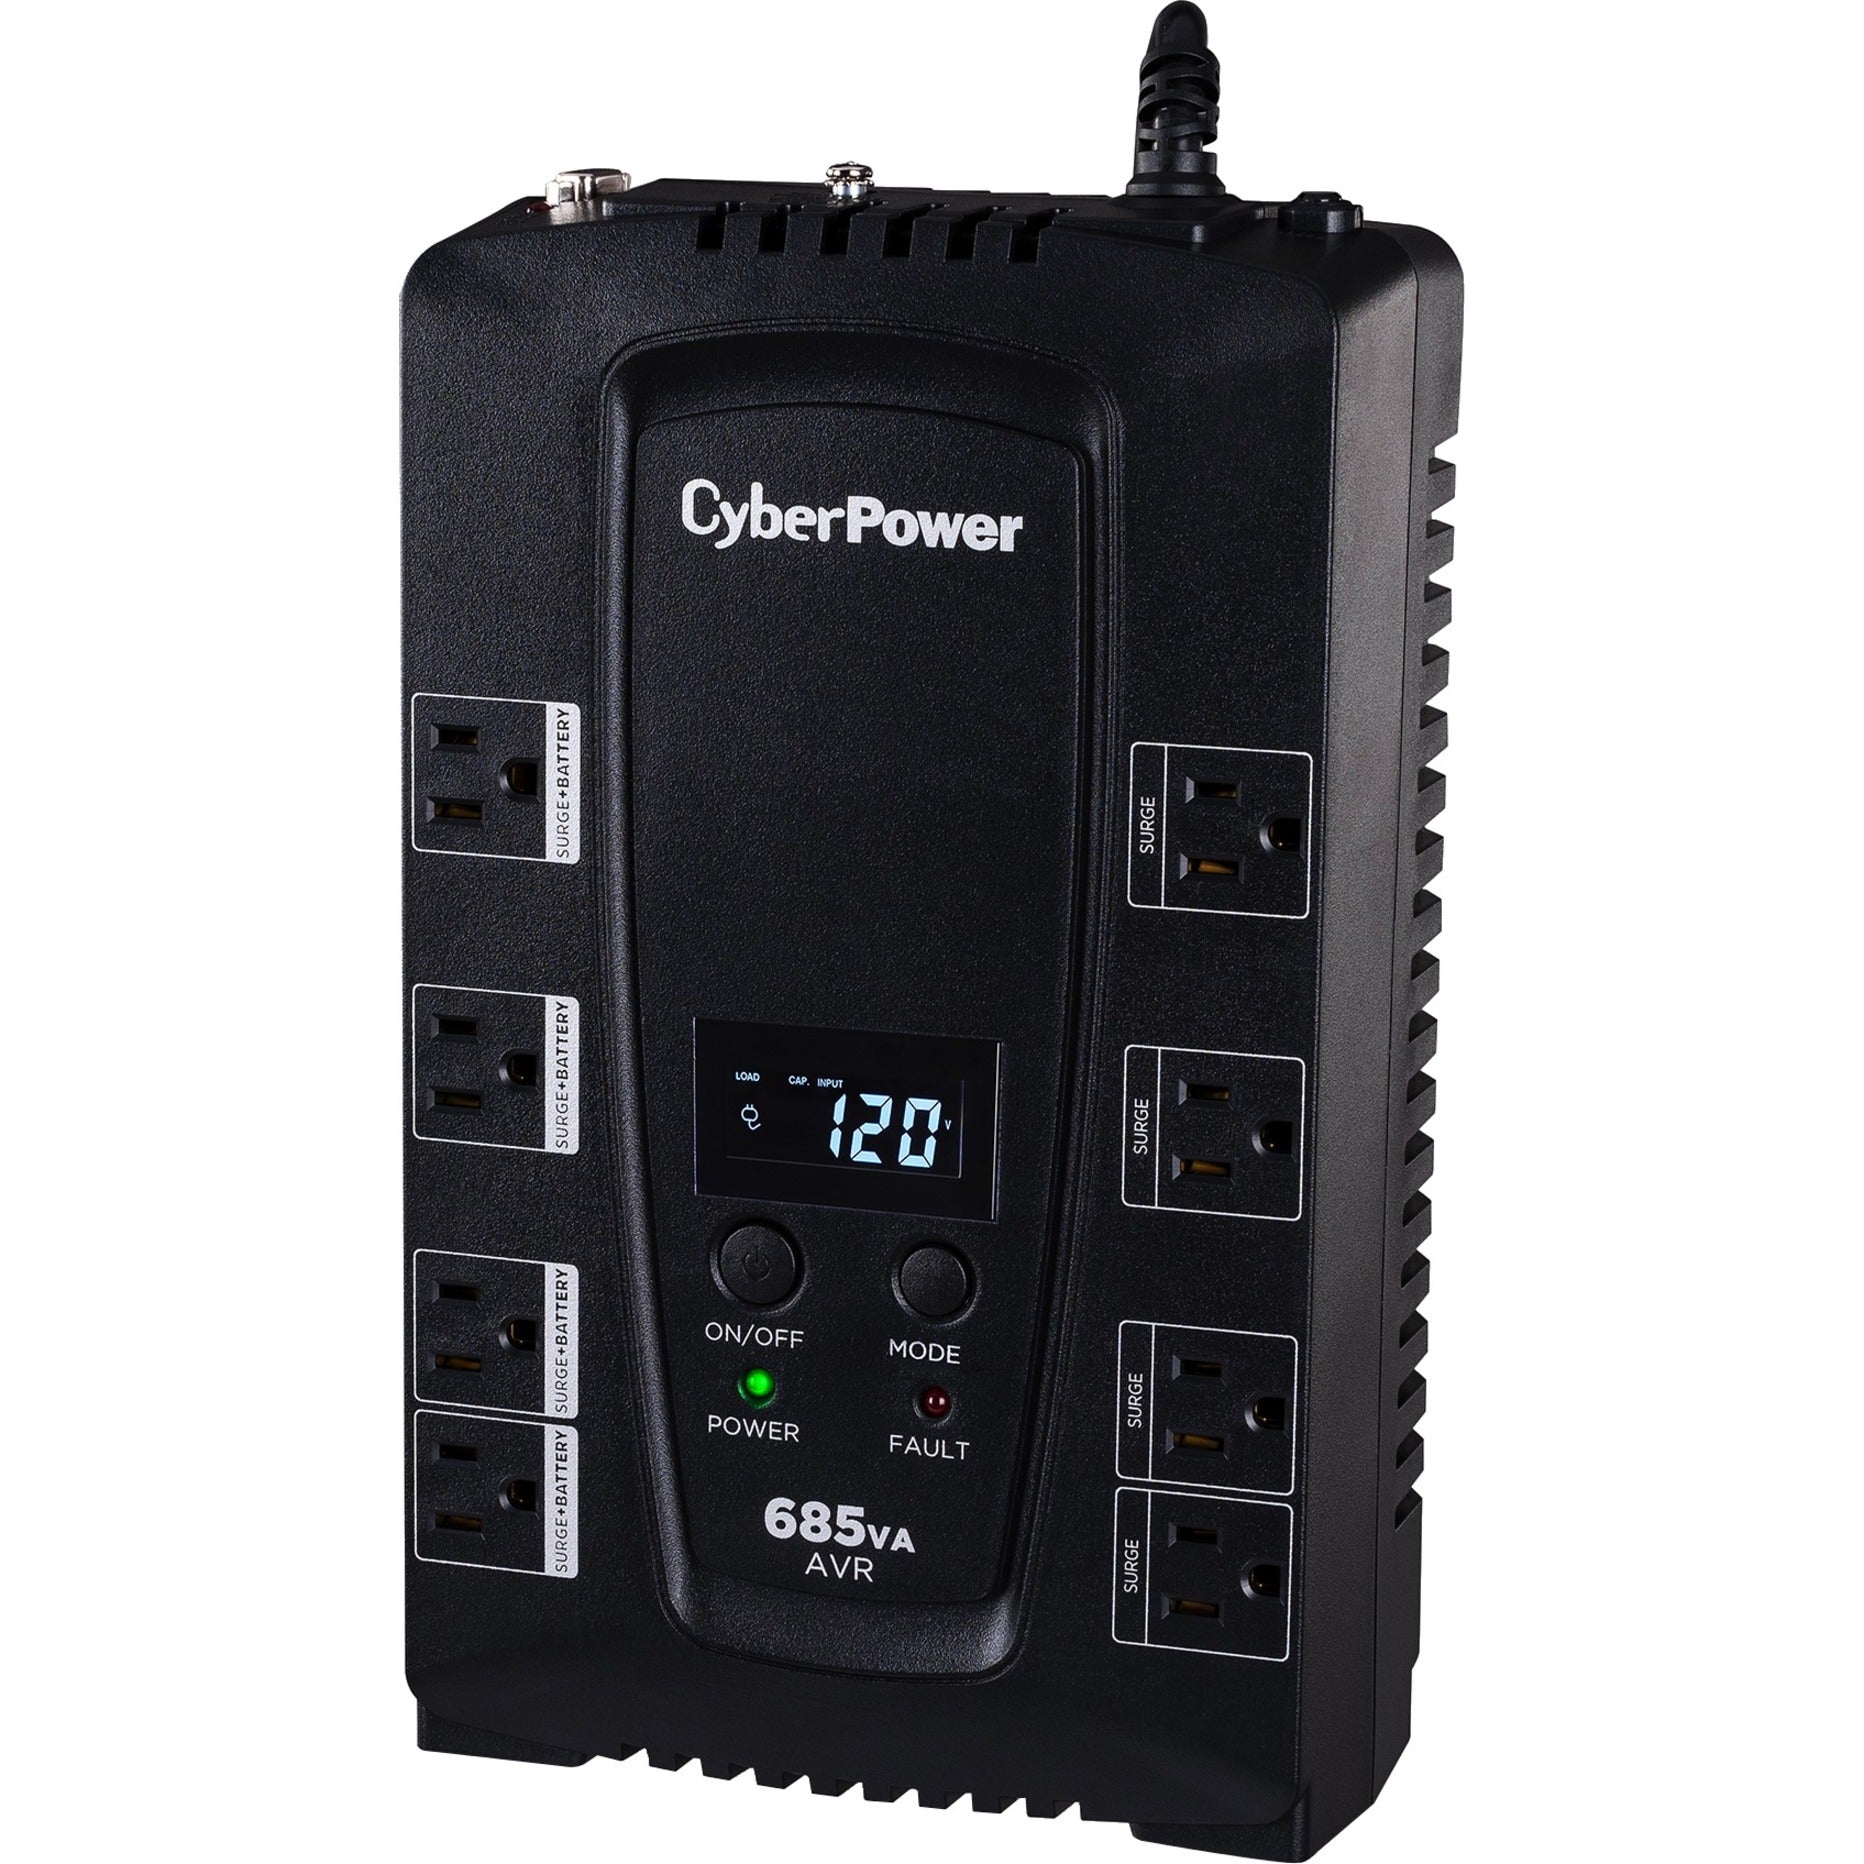 CyberPower CP685AVRLCD Intelligent LCD UPS Systems, 685VA/390W, Energy Star, USB, 3 Year Warranty